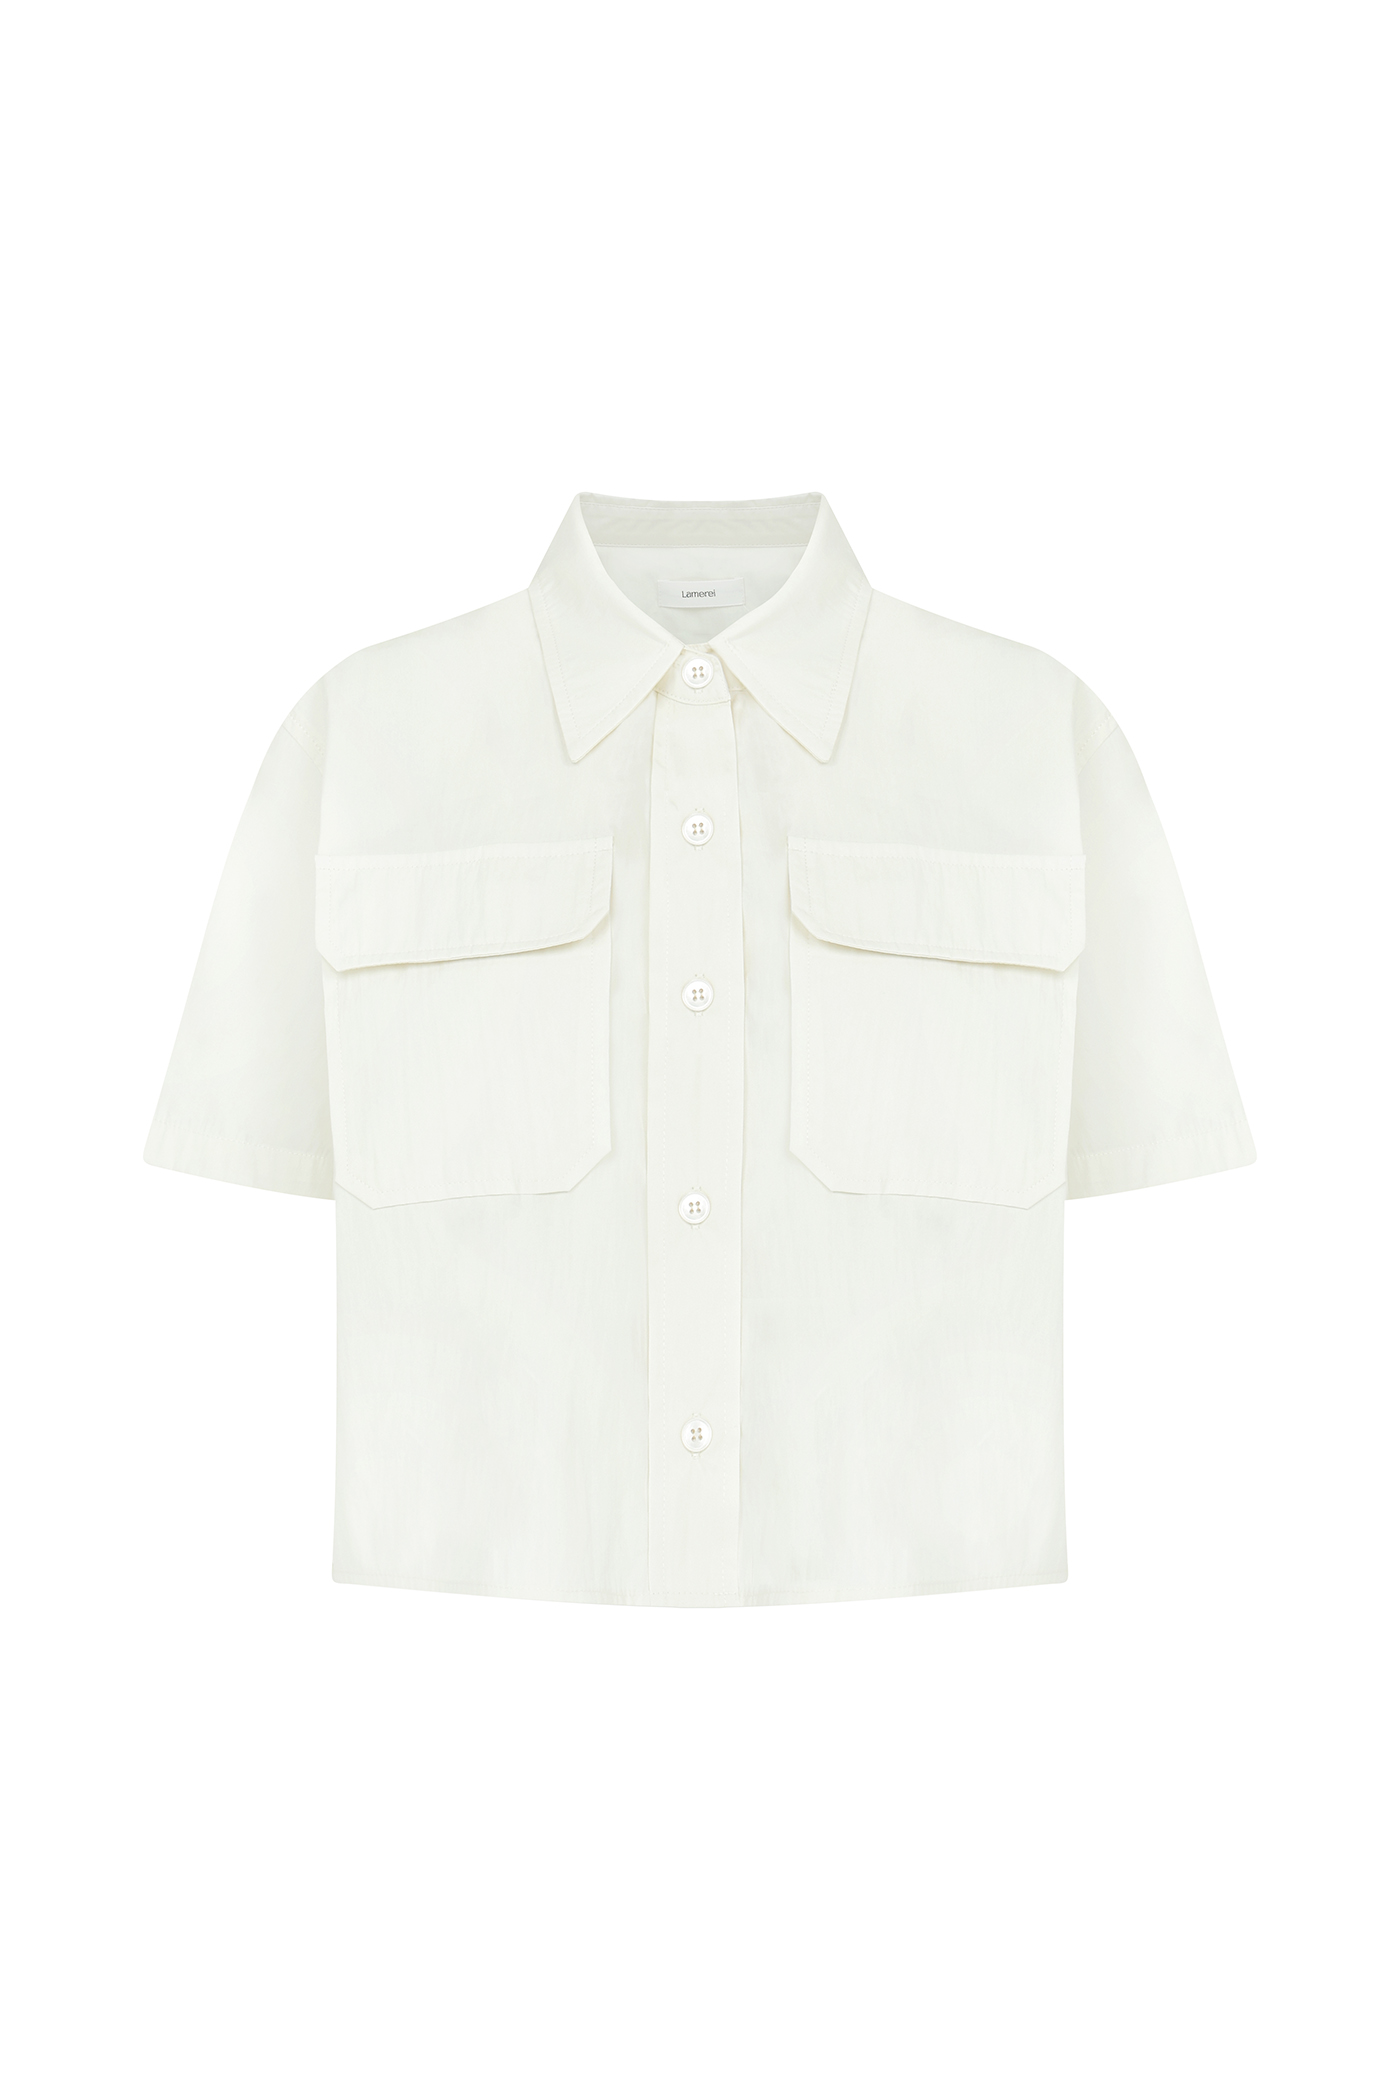 Pocket Crop Shirt[LMBCSUSH304]-2color